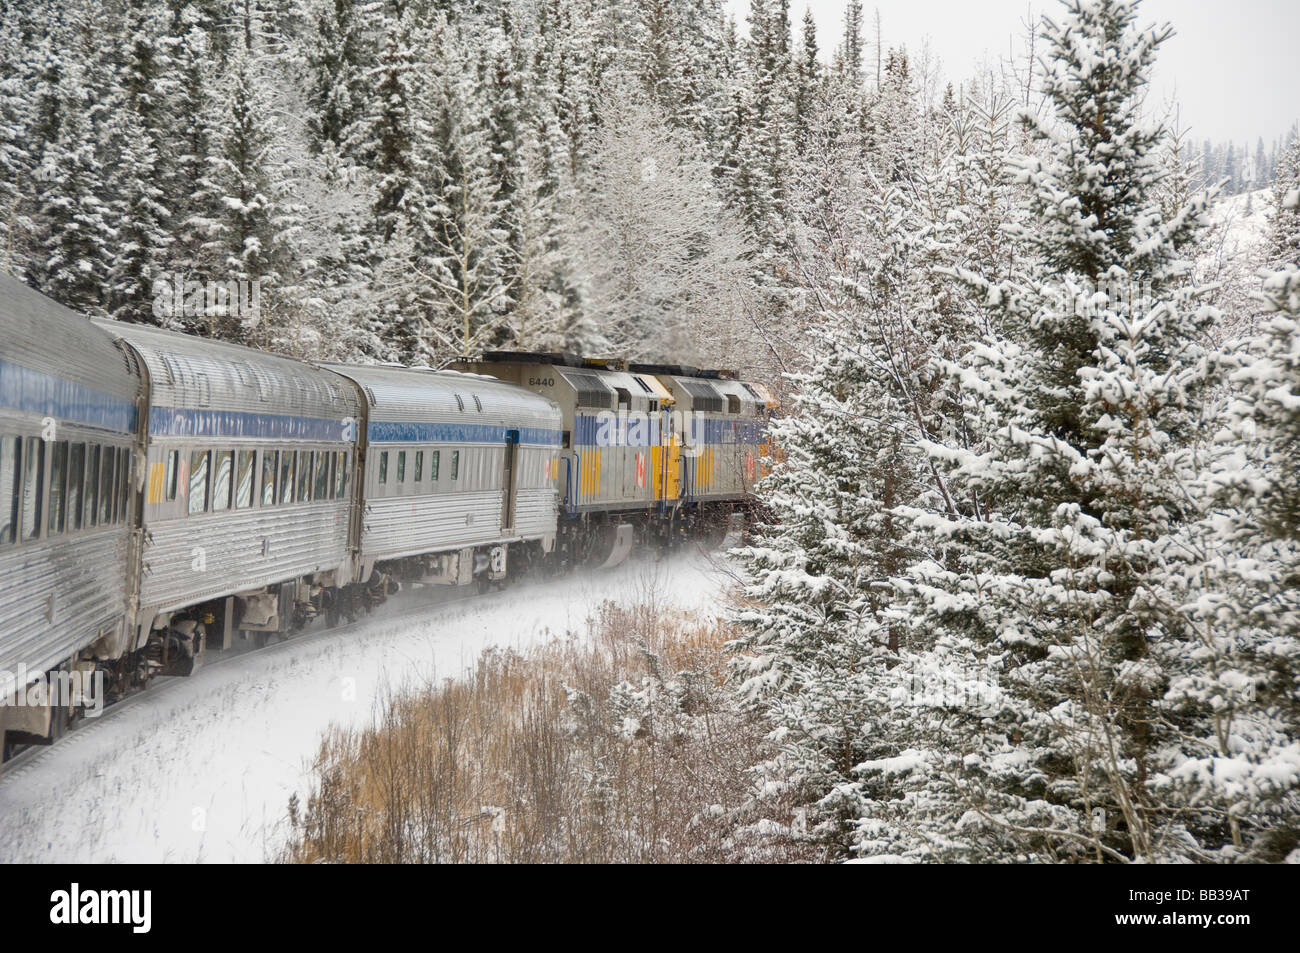 snow edmonton train alberta jasper rail alamy canada between via